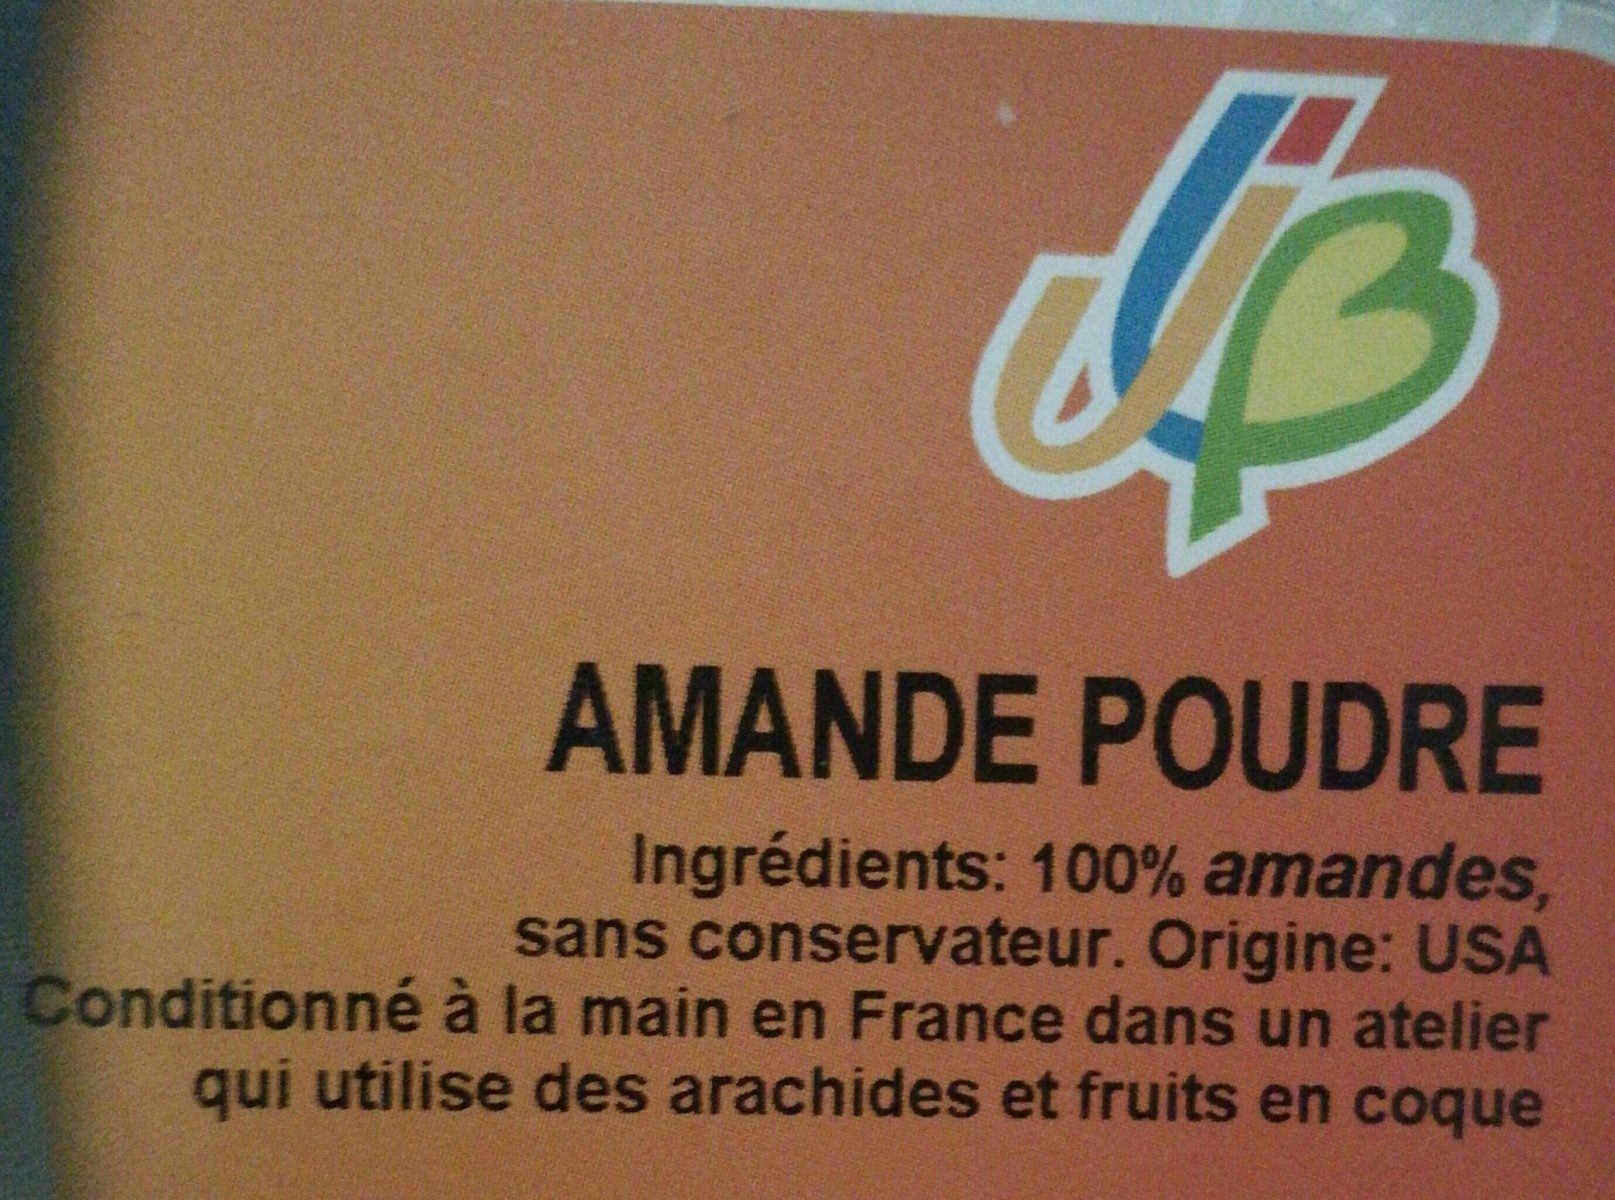 Amande poudre - Ingredients - fr